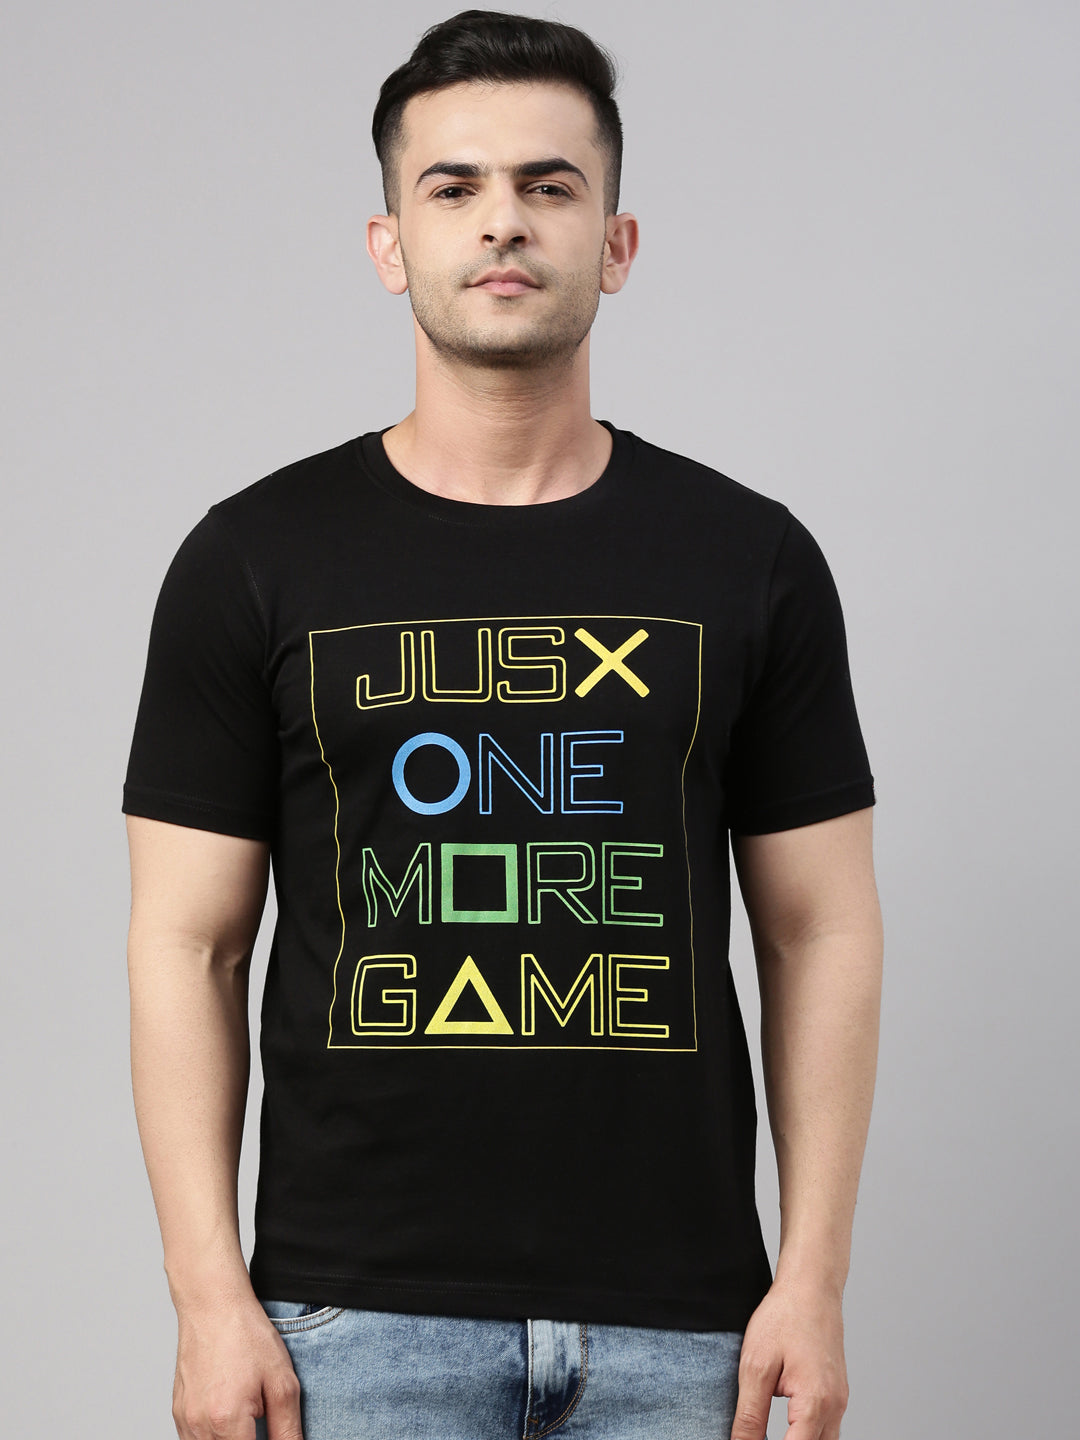 One More Game T Shirt Graphic T-Shirts Bushirt   